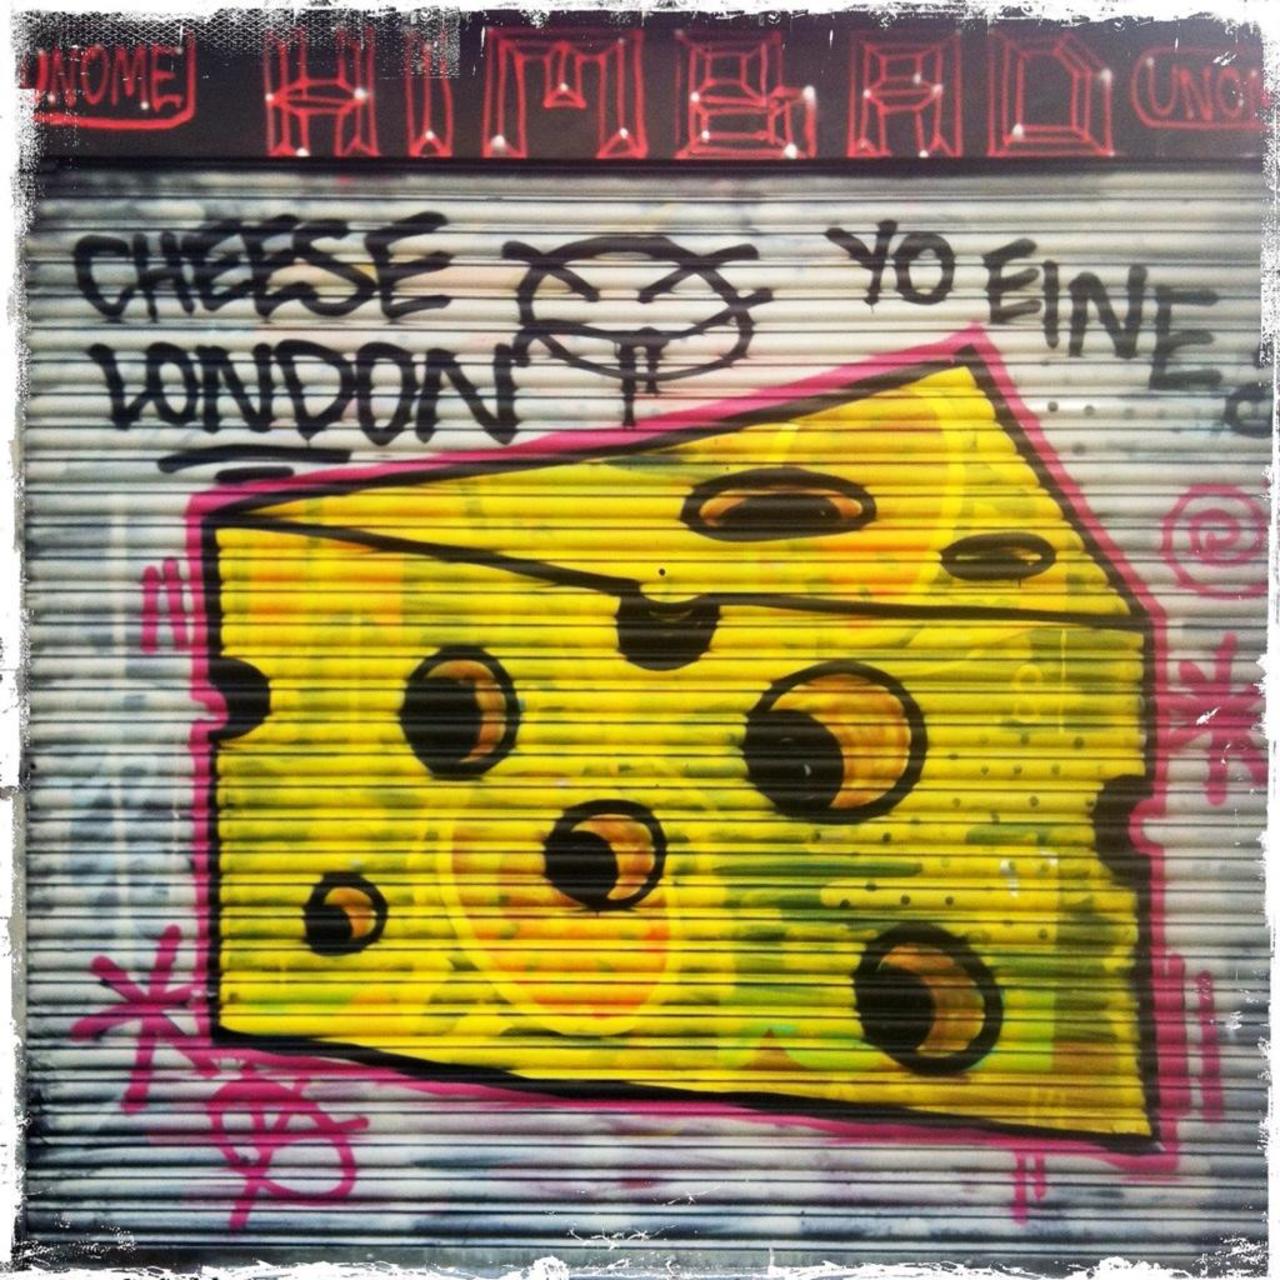 The Big Cheese

Sclater Street, Spitalfields #art #streetart @HIMBAD_ @LDNGraffiti #graffiti @SclaterStStall http://t.co/elW8GlY7sd